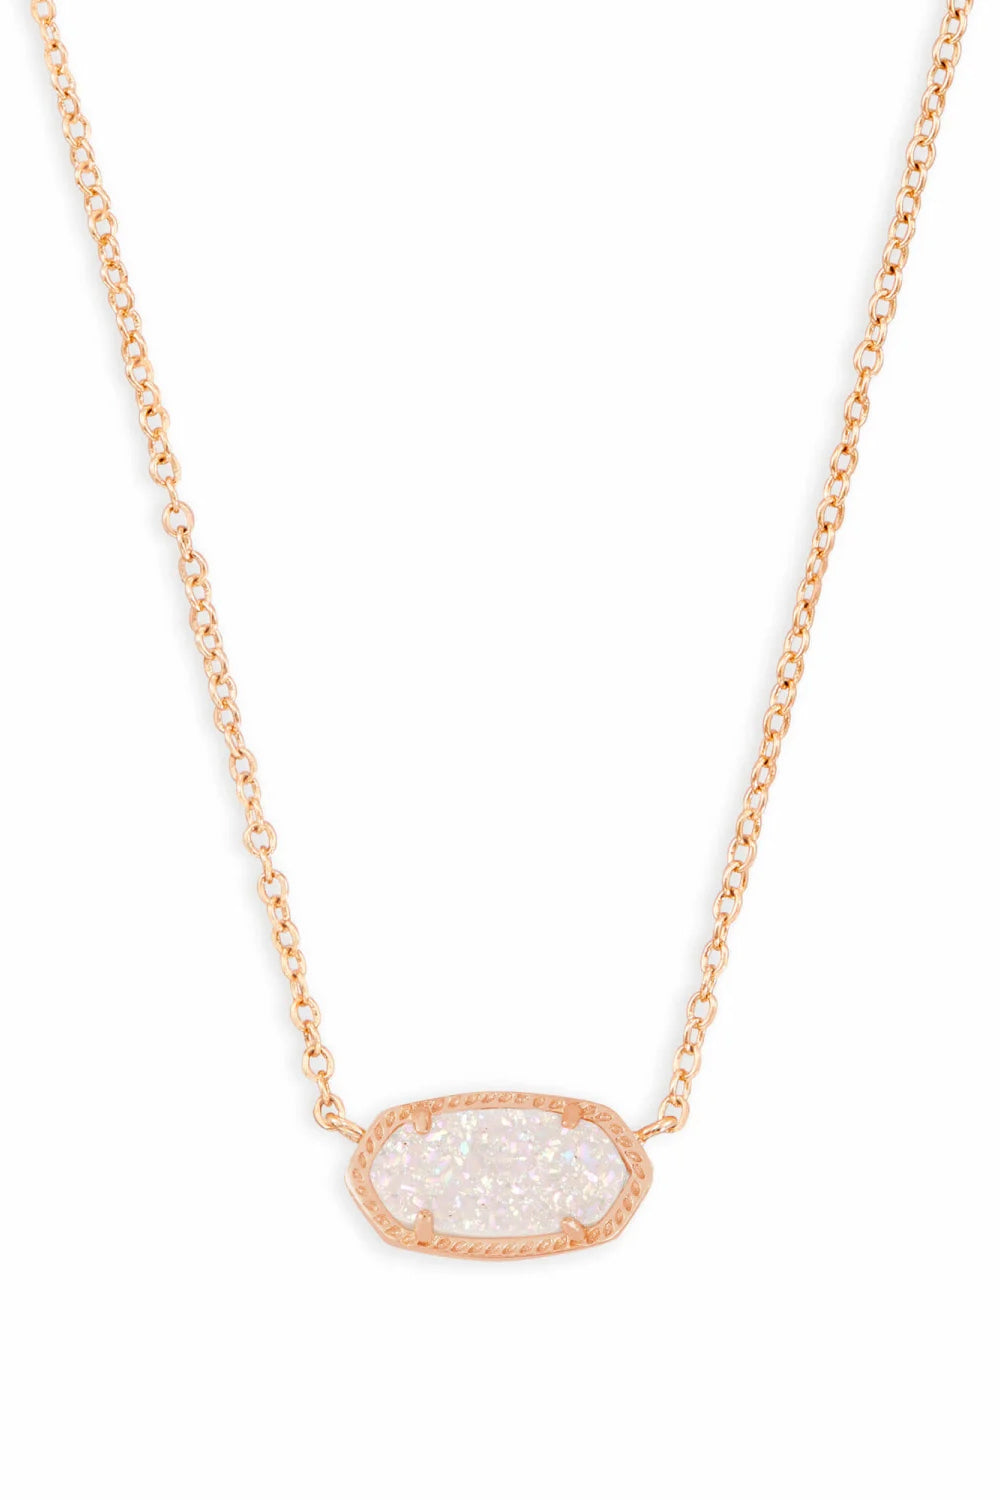 Kendra Scott: Elisa Rose Gold Short Pendant Necklace - Iridescent Drusy | Makk Fashions